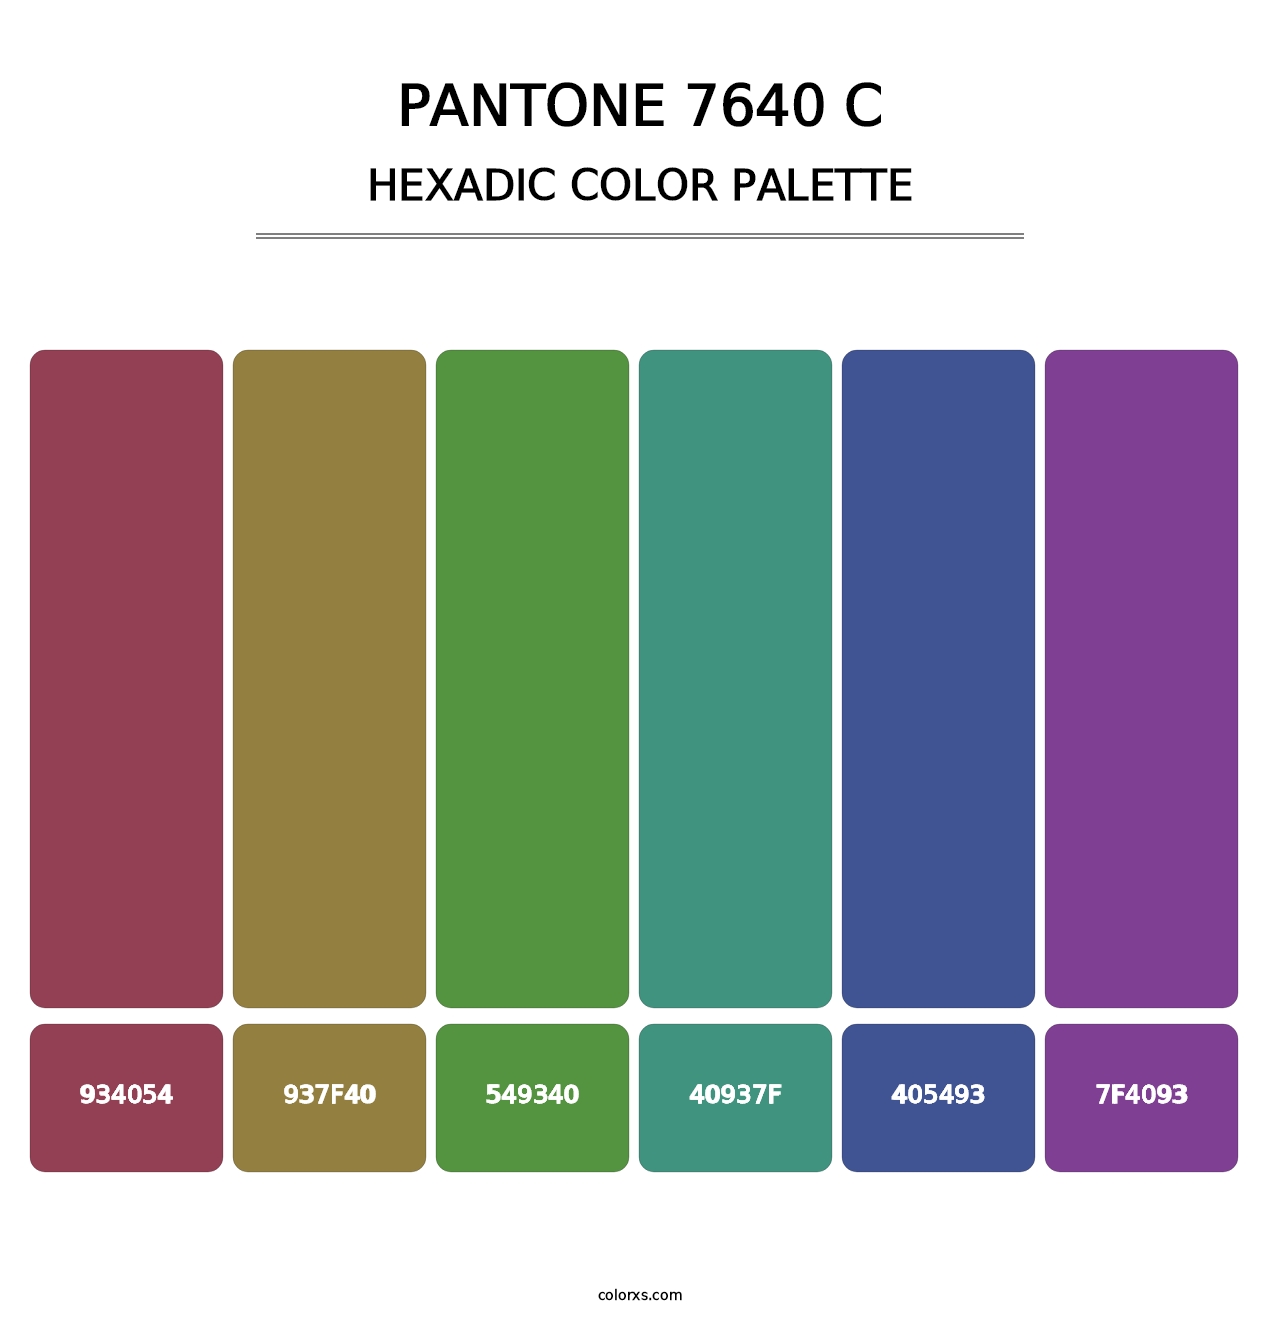 PANTONE 7640 C - Hexadic Color Palette